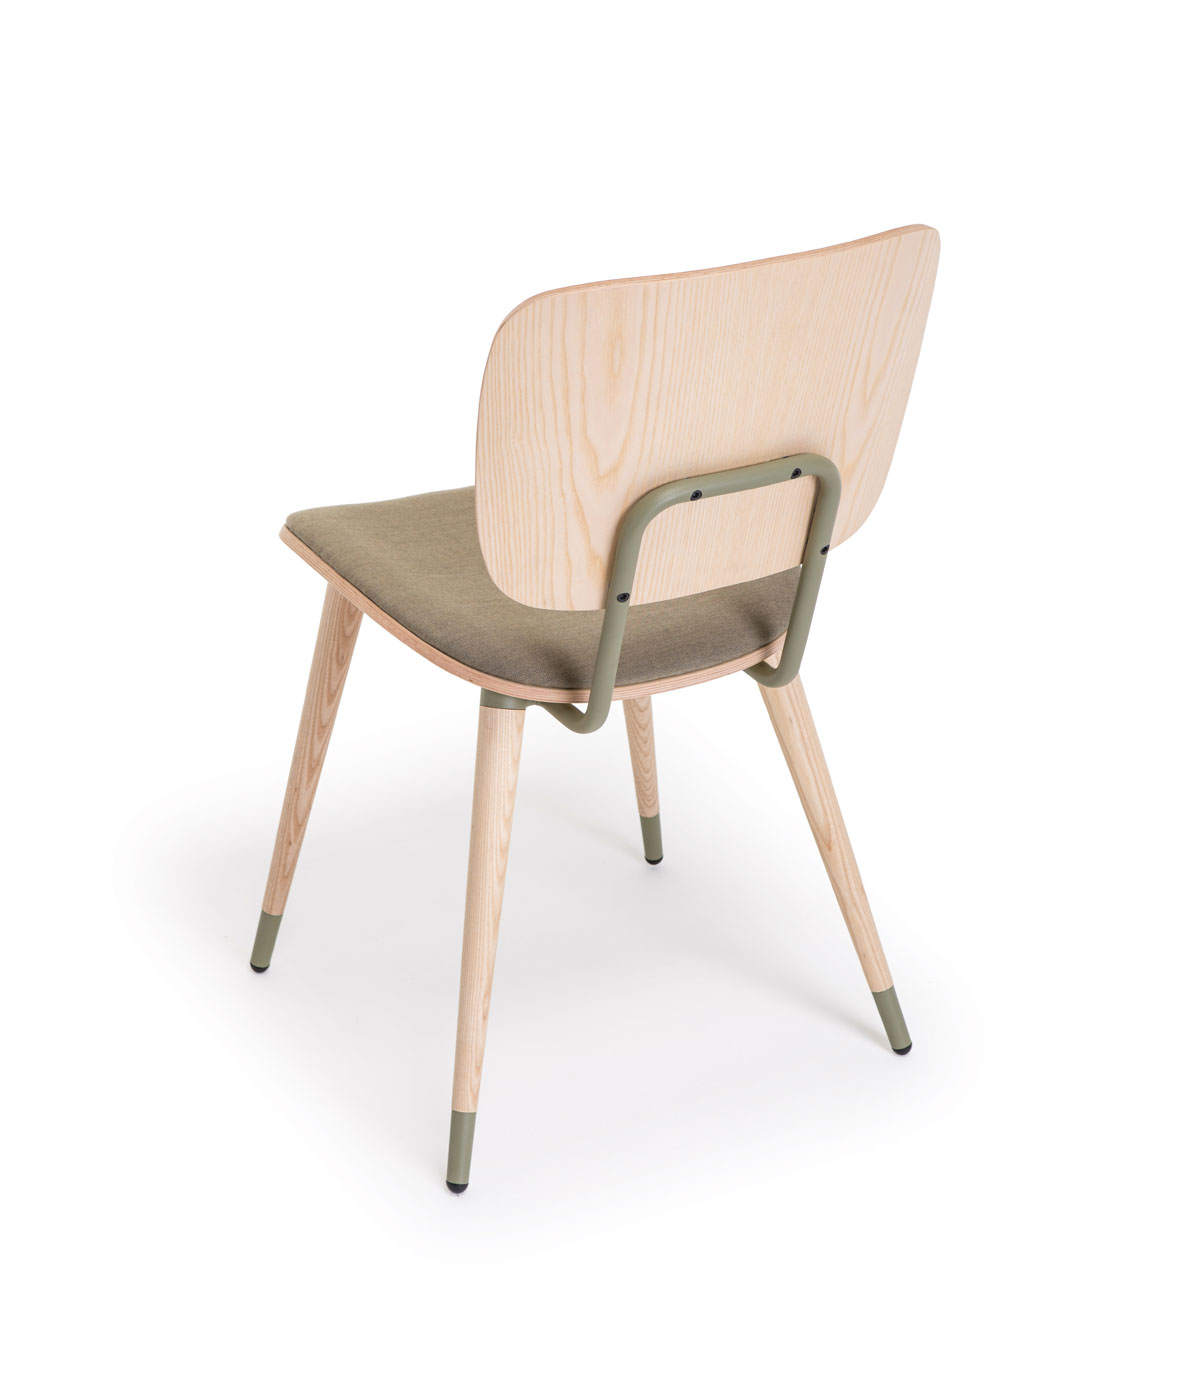 ABC chair with wooden legs - Vergés